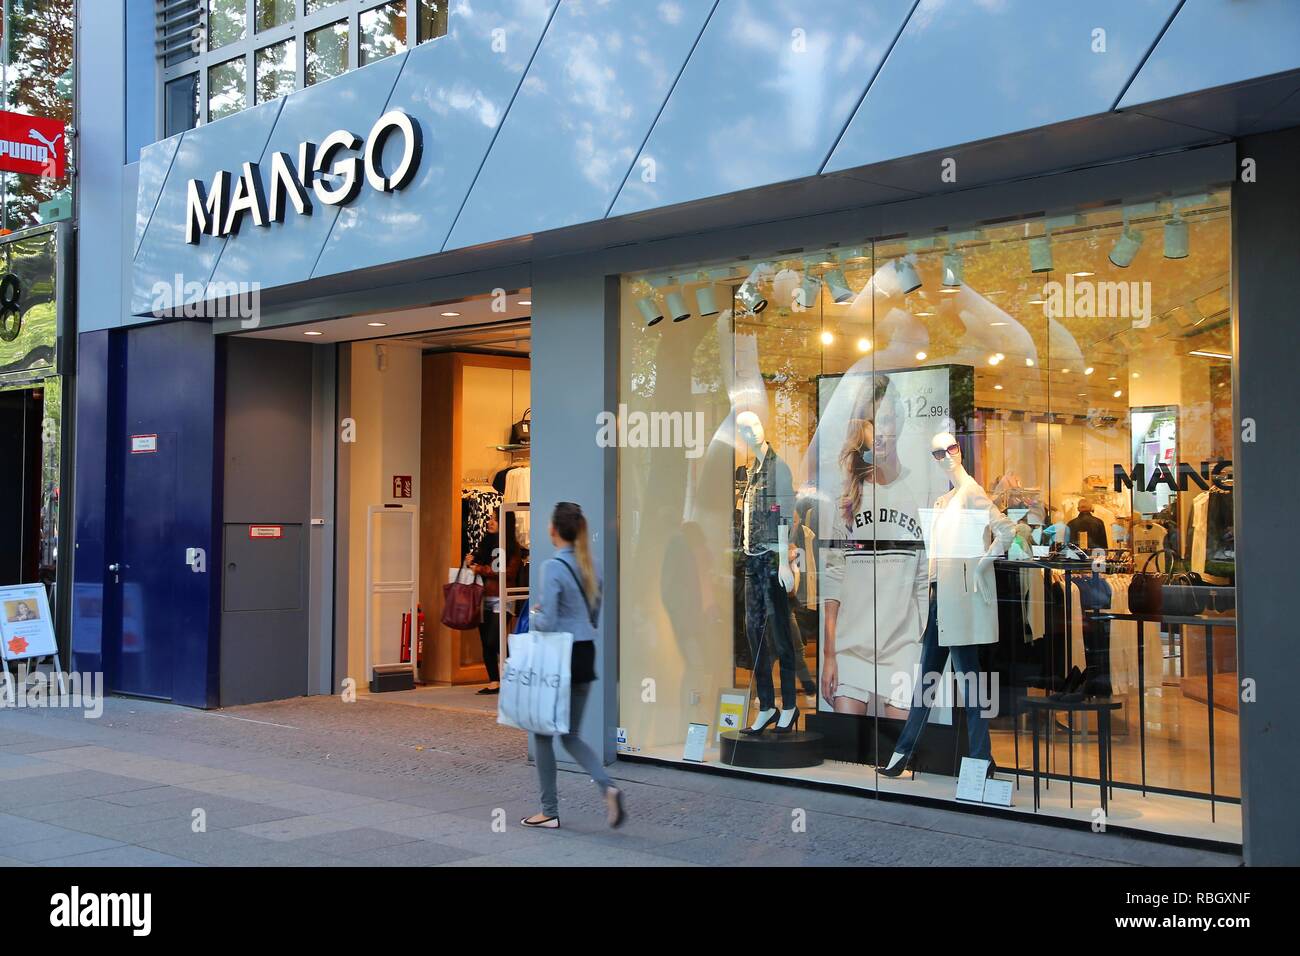 Mango fashion hi-res stock photography and images - Alamy